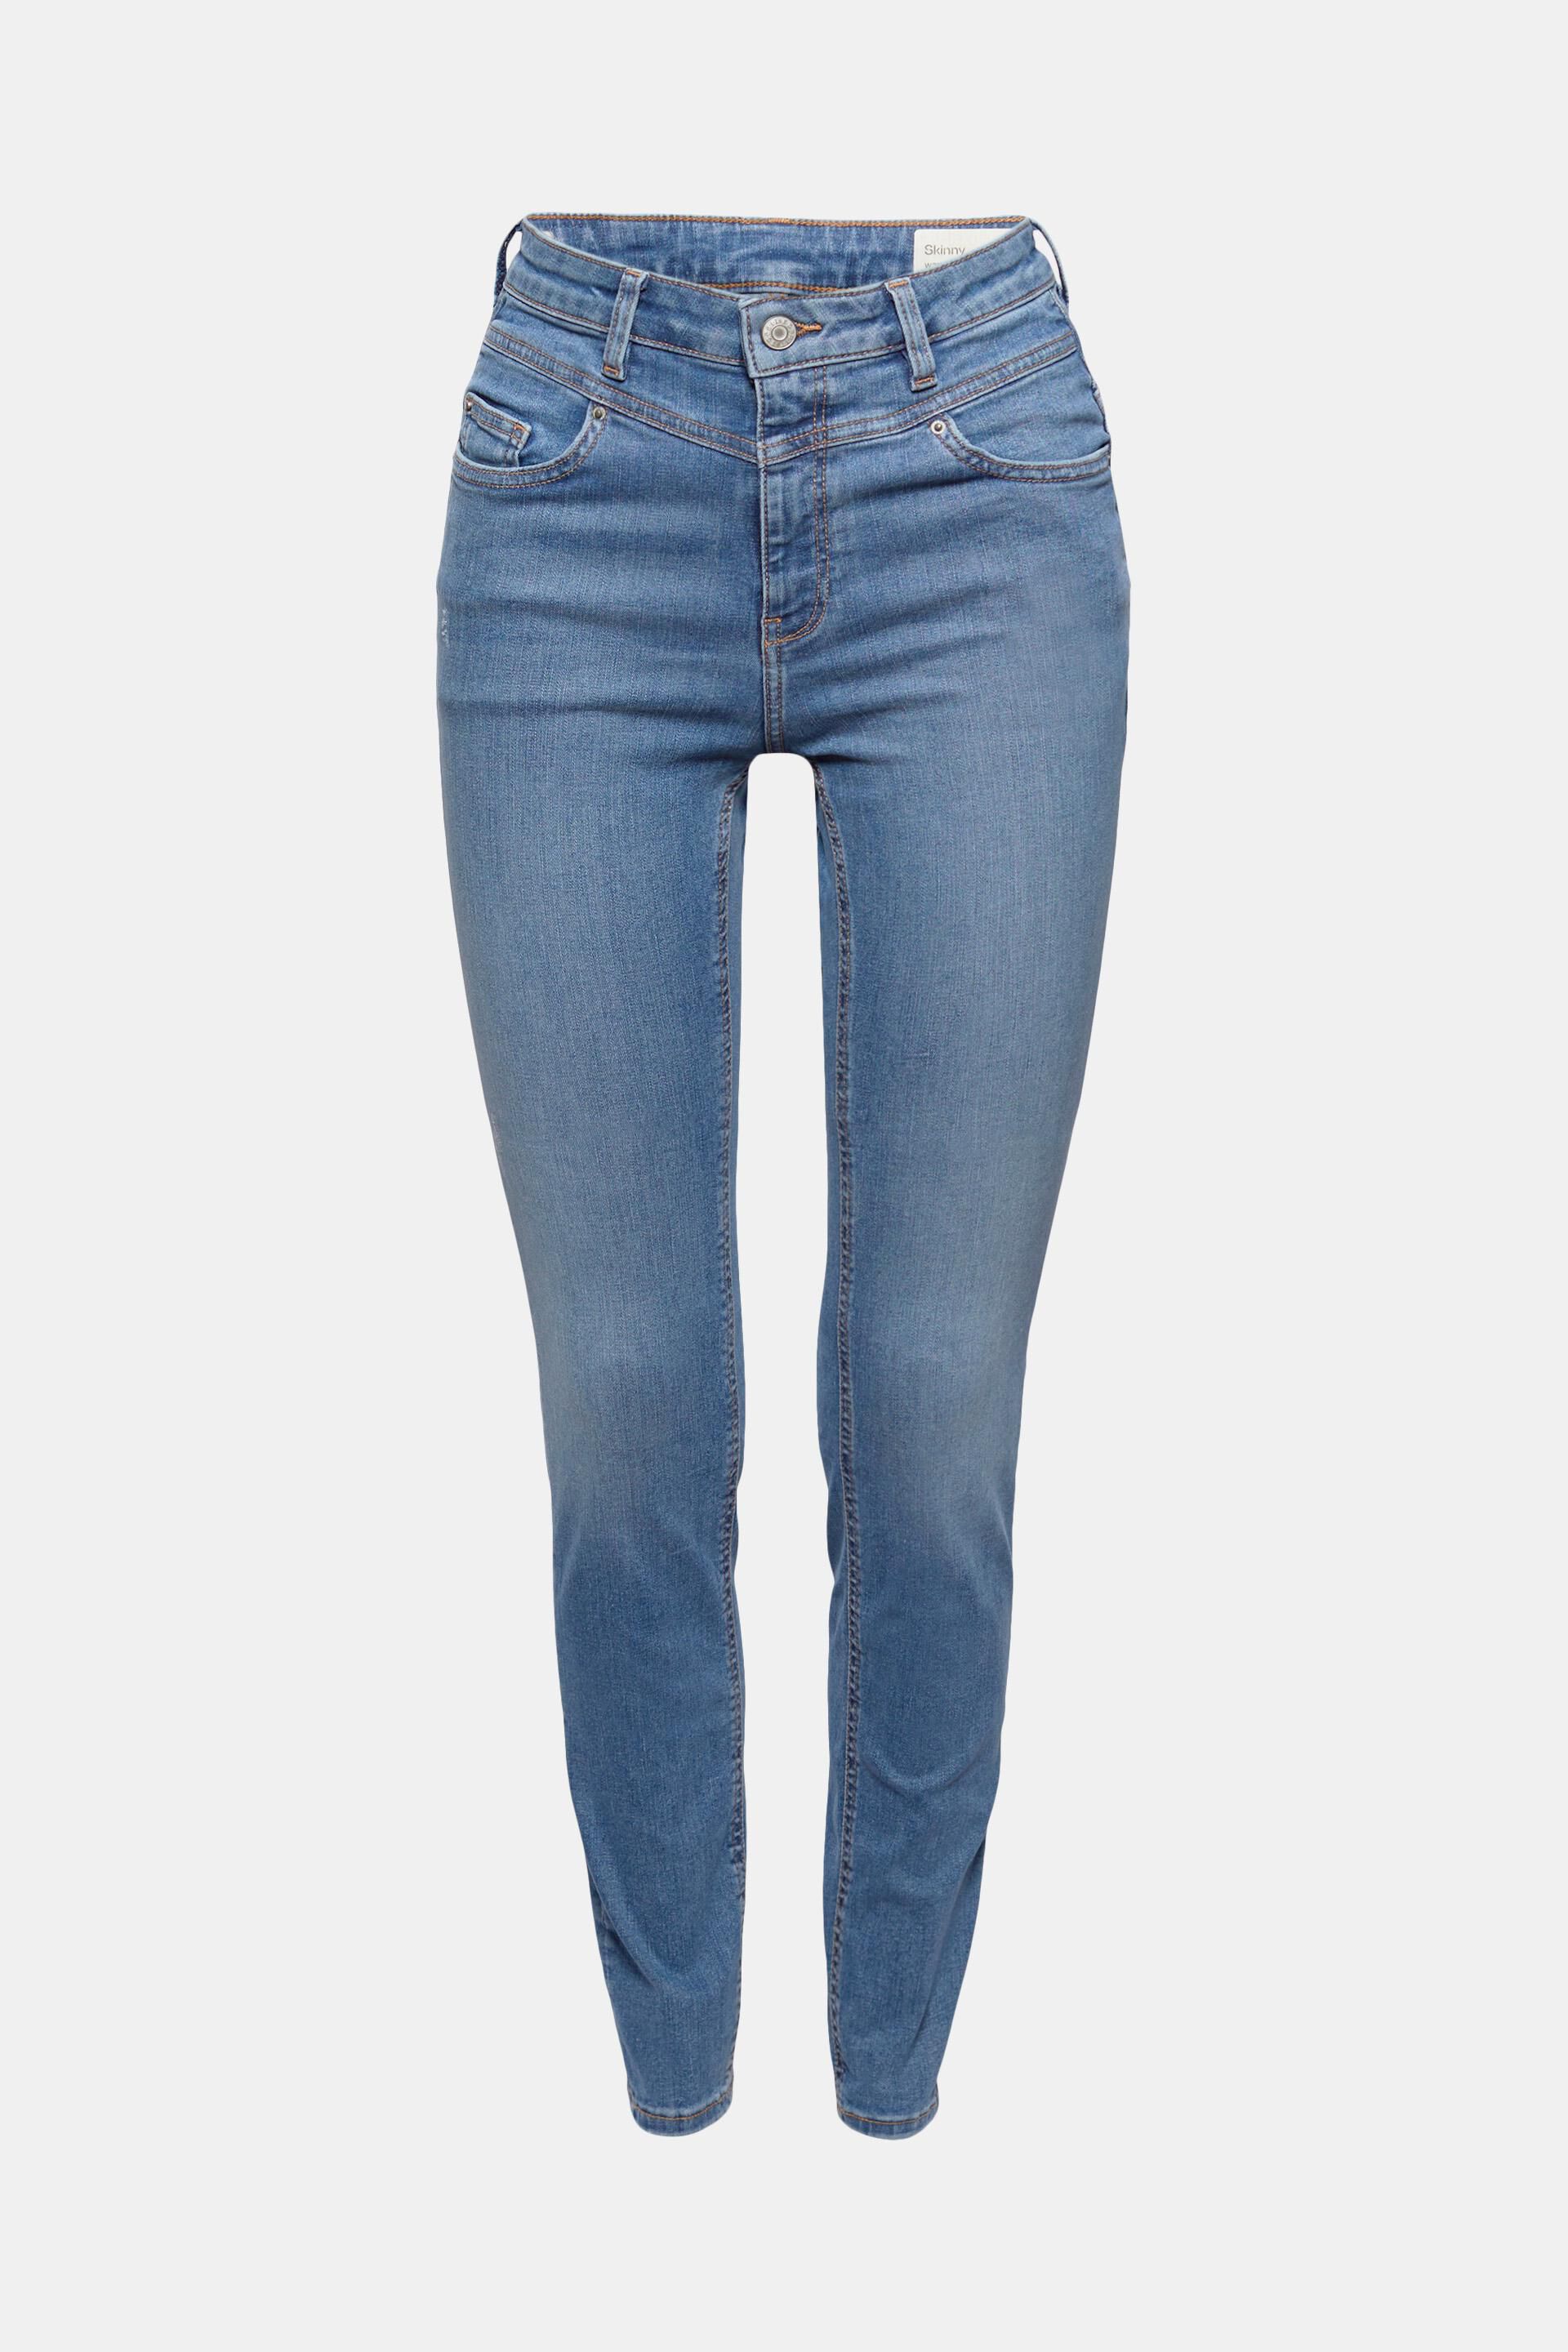 Mode Spijkerbroeken Hoge taille jeans Reserved Hoge taille jeans room casual uitstraling 